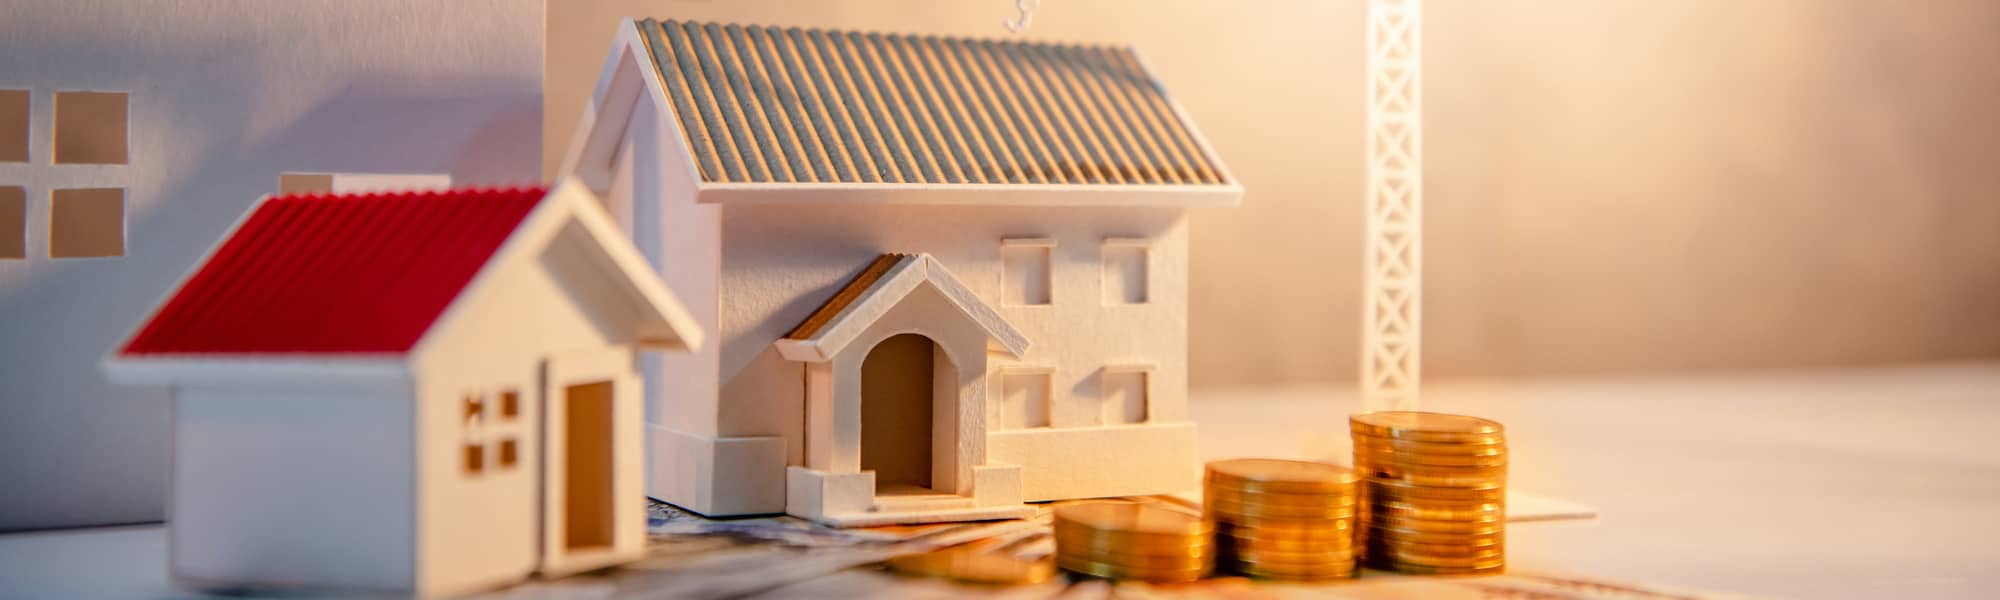 Real Estate 101: Learn Real Estate Investing Basics